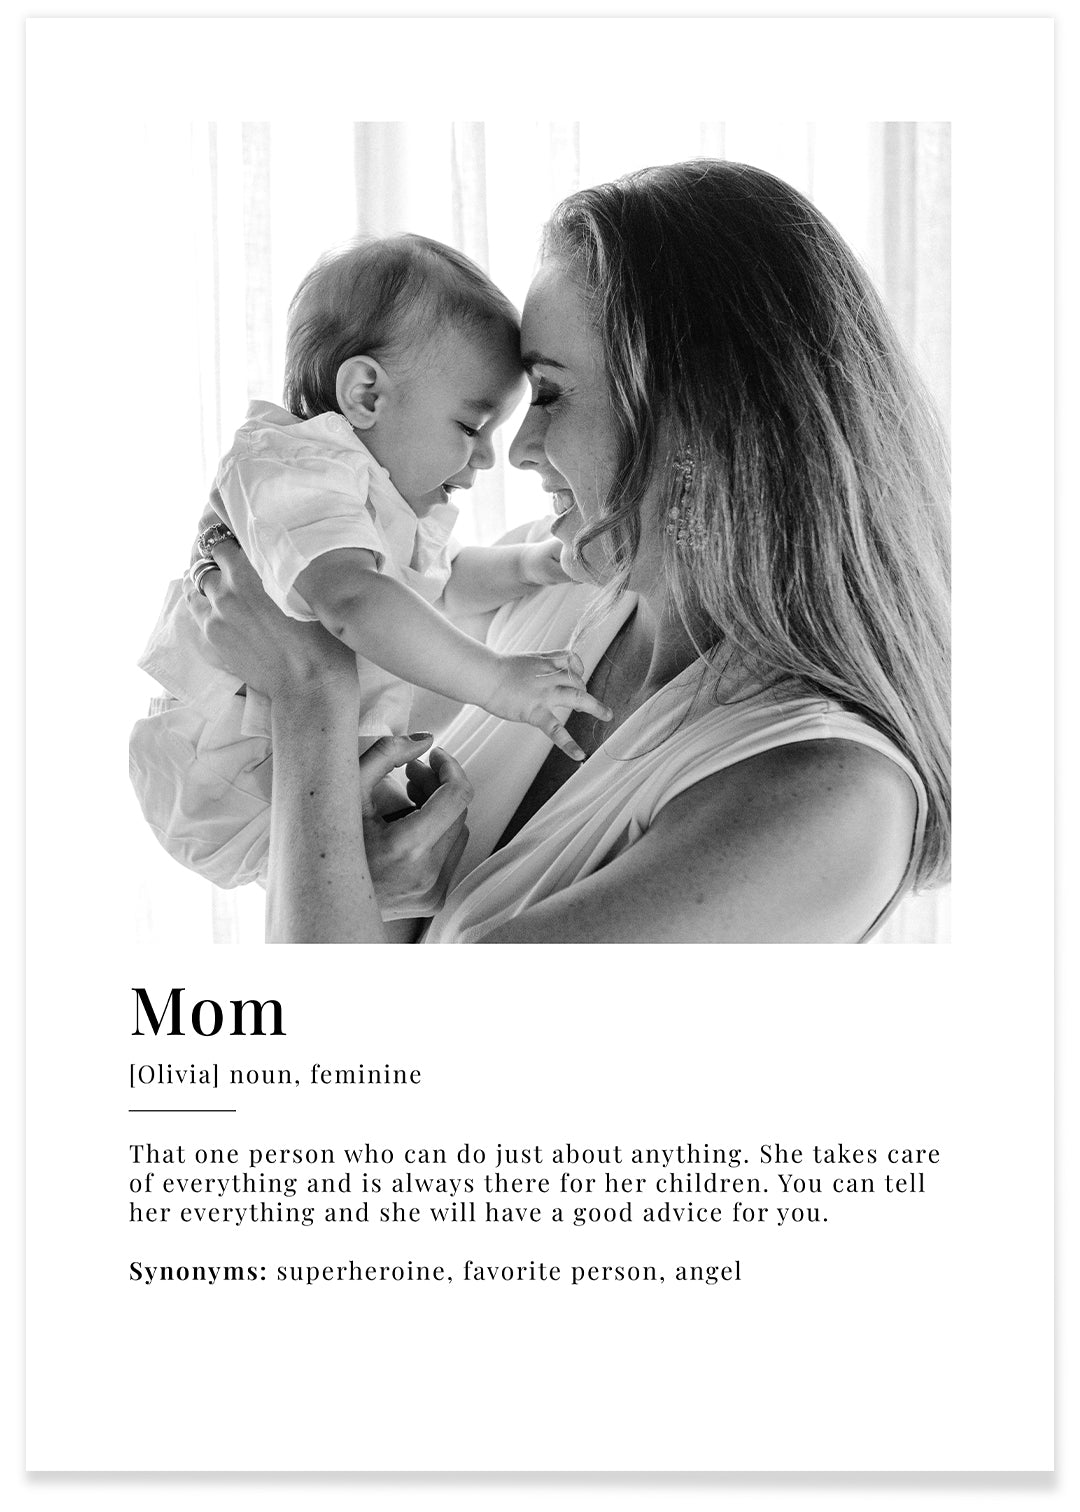 Photo poster "Mom Definition" (English)